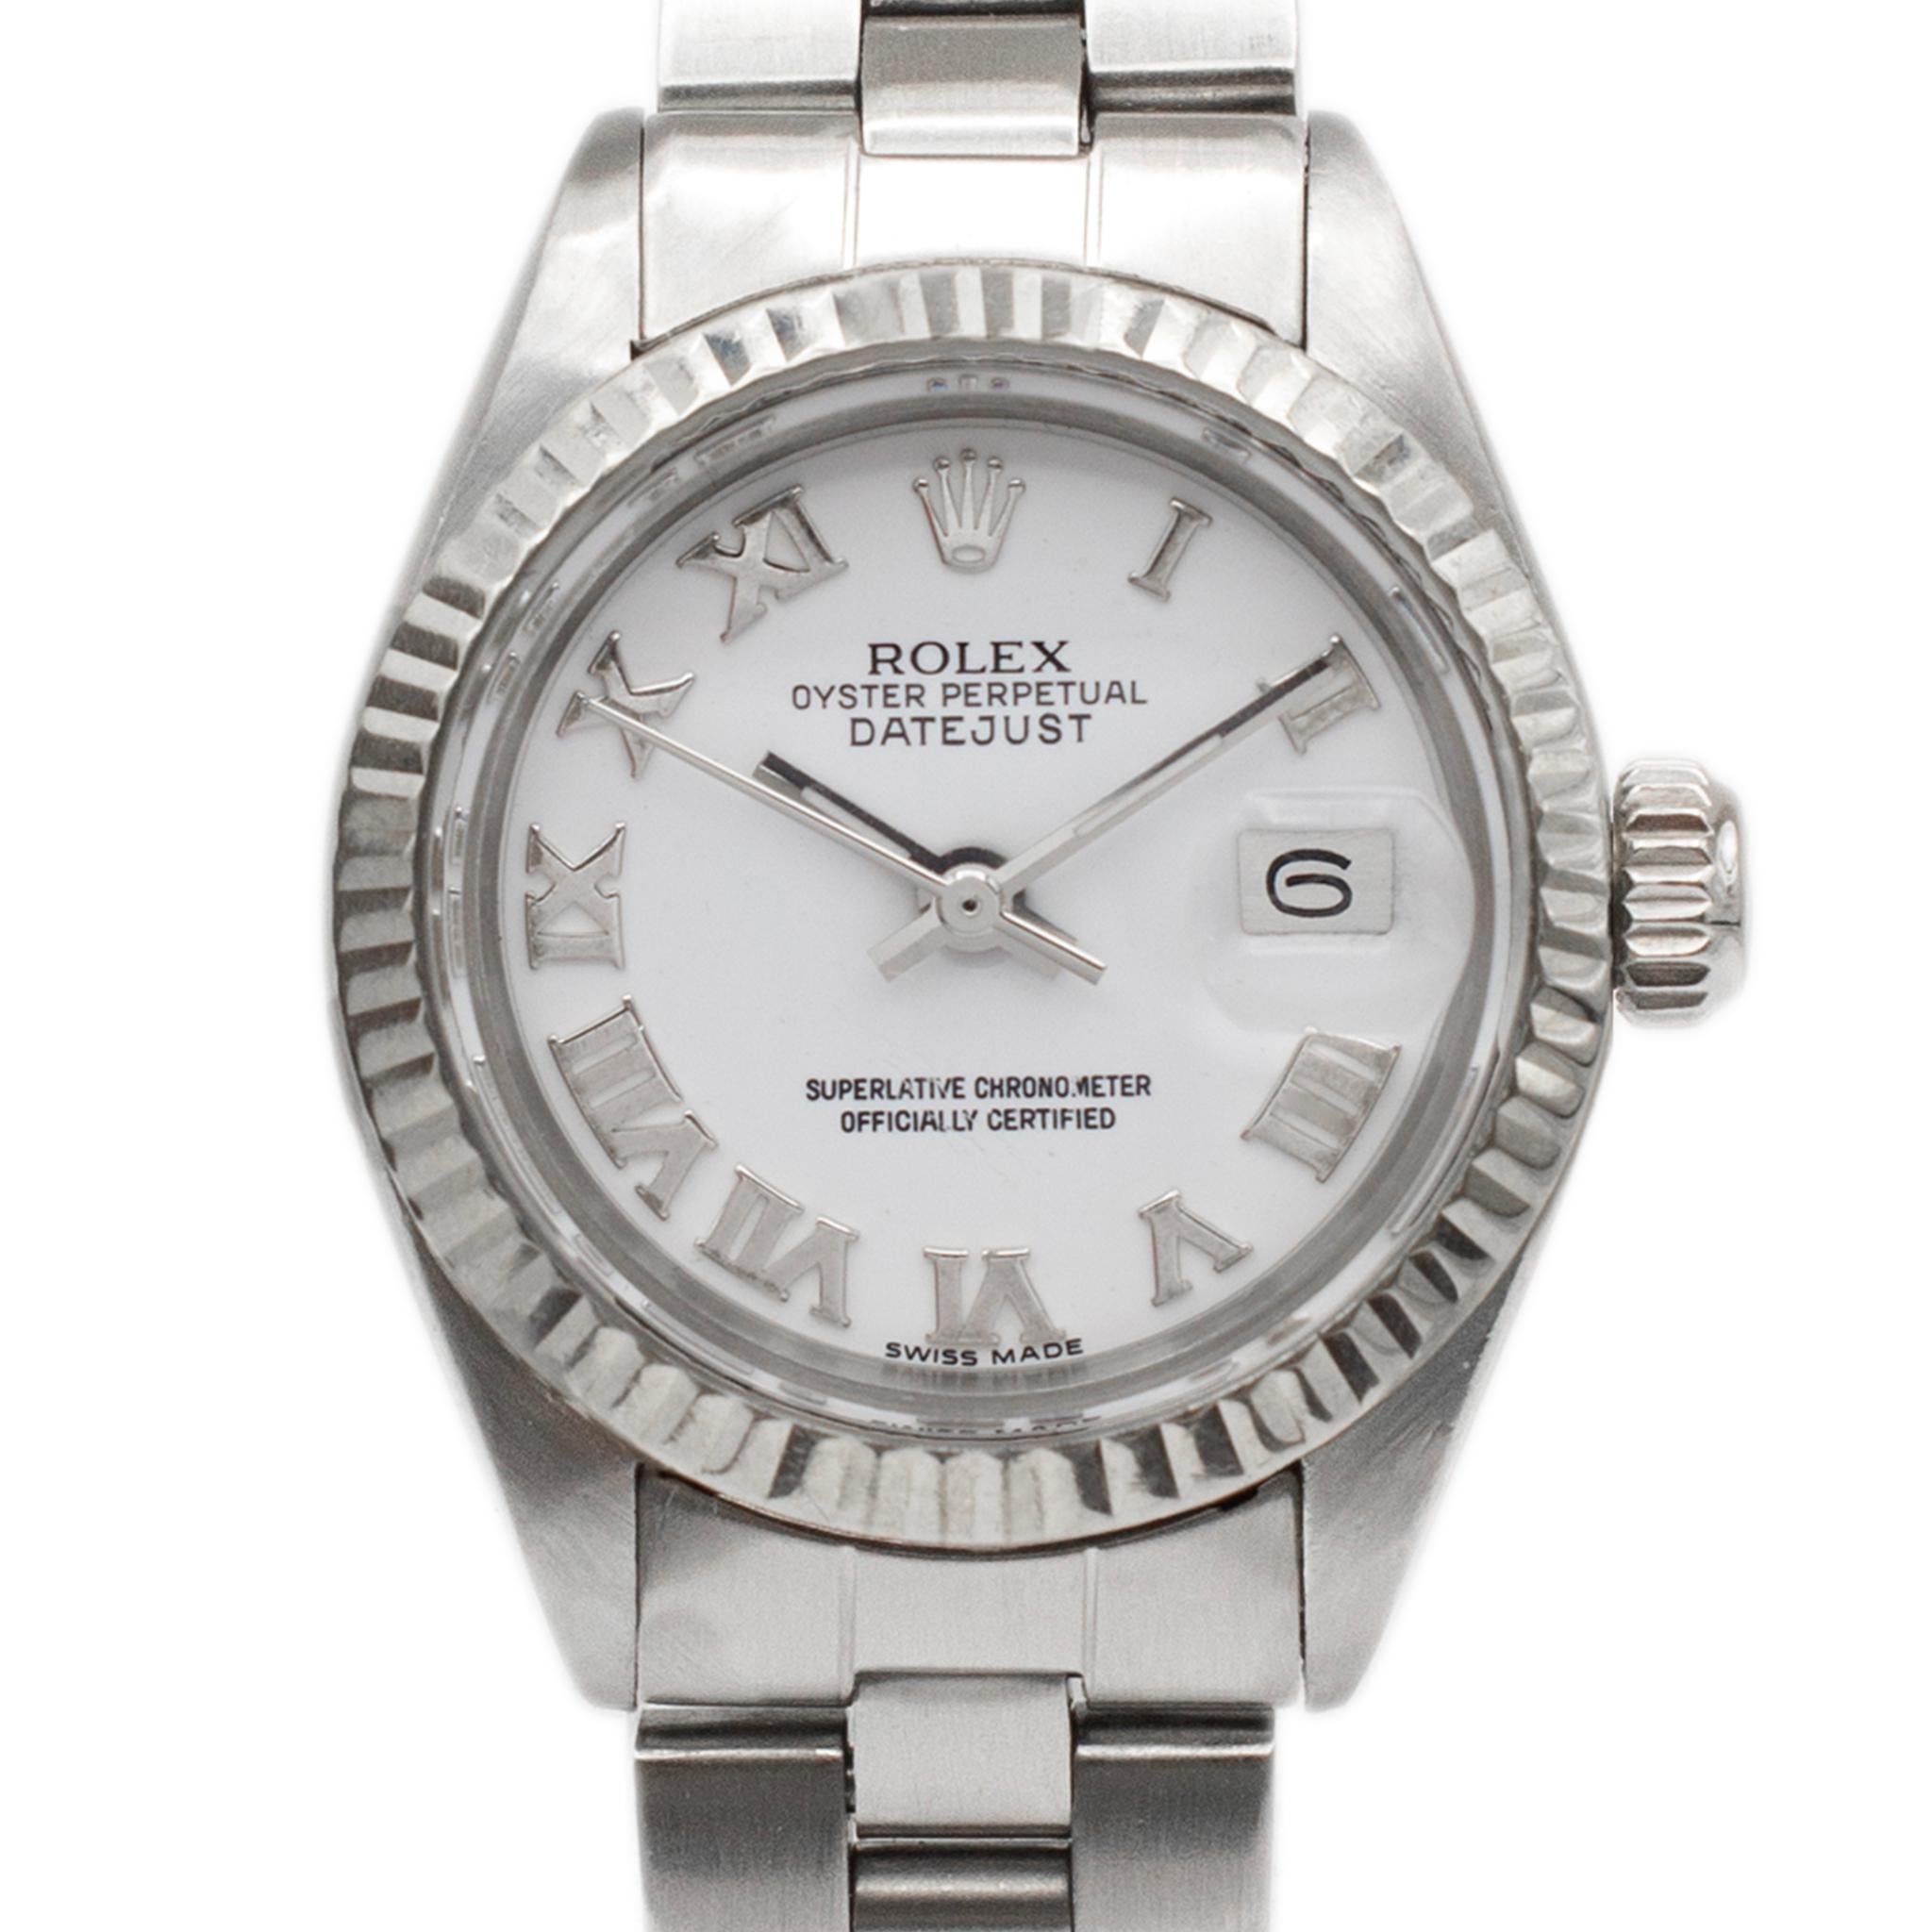 Brand: Rolex

Gender: Ladies

Metal Type: Stainless Steel

Diameter: 26.00 mm

Weight: 47.62 Grams

Ladies stainless steel ROLEX Swiss made watch. The 